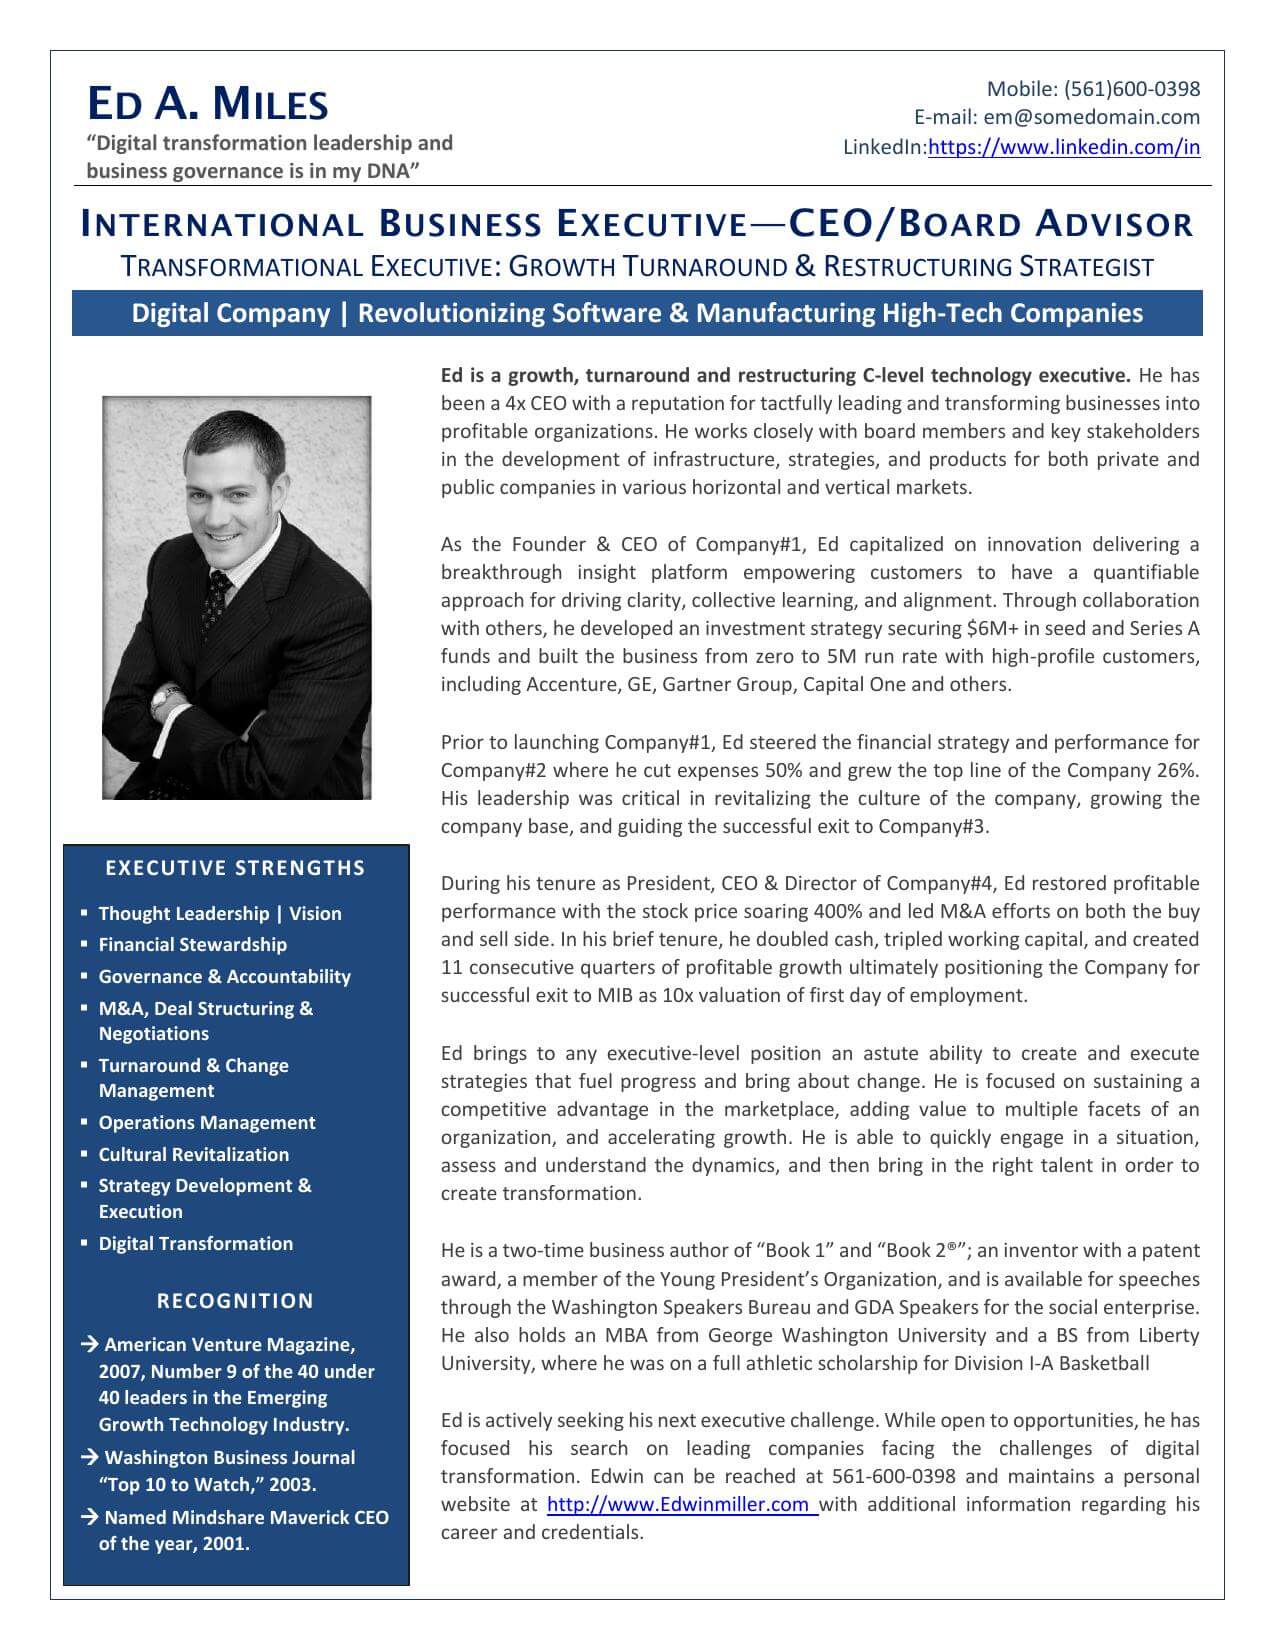 International Executive CEO & Board Advisor (1)